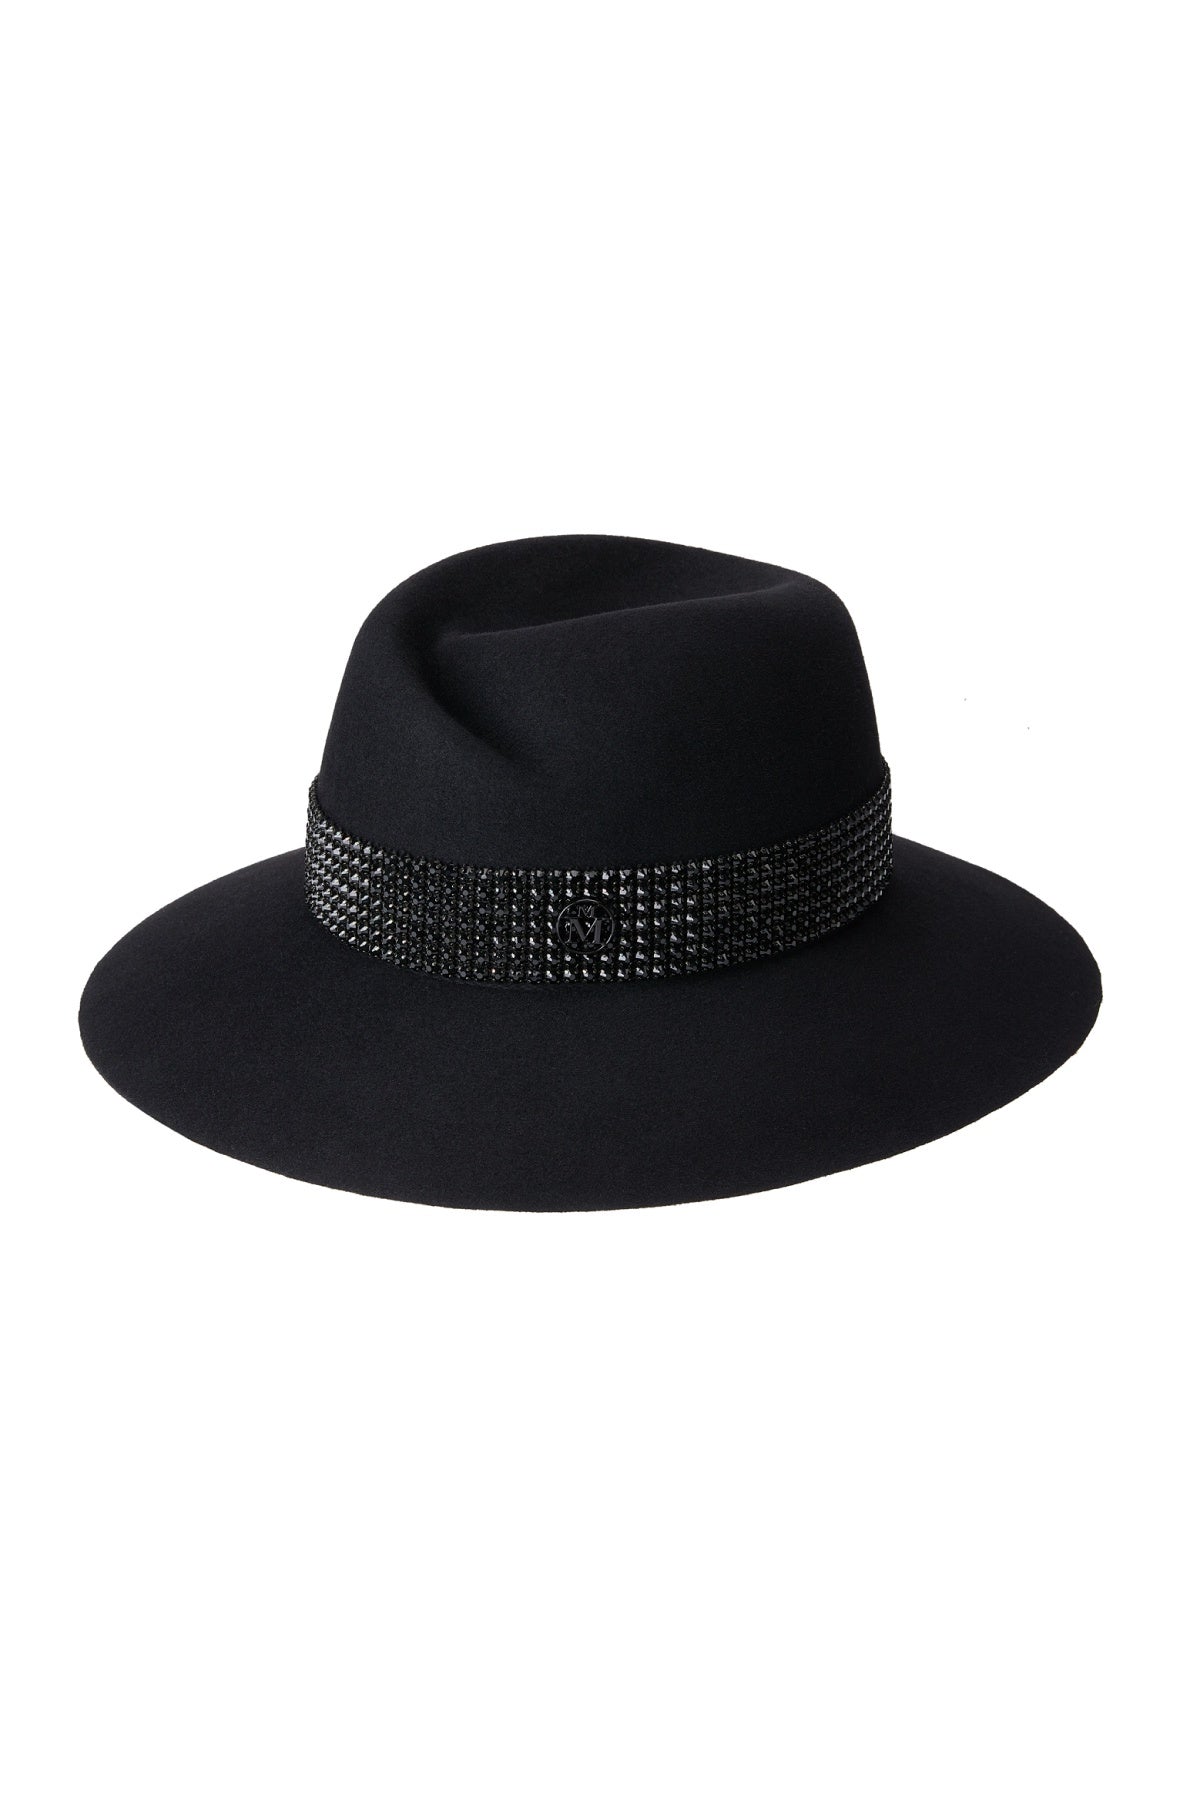 Maison Michel Virginie Studded Felt Hat - Black